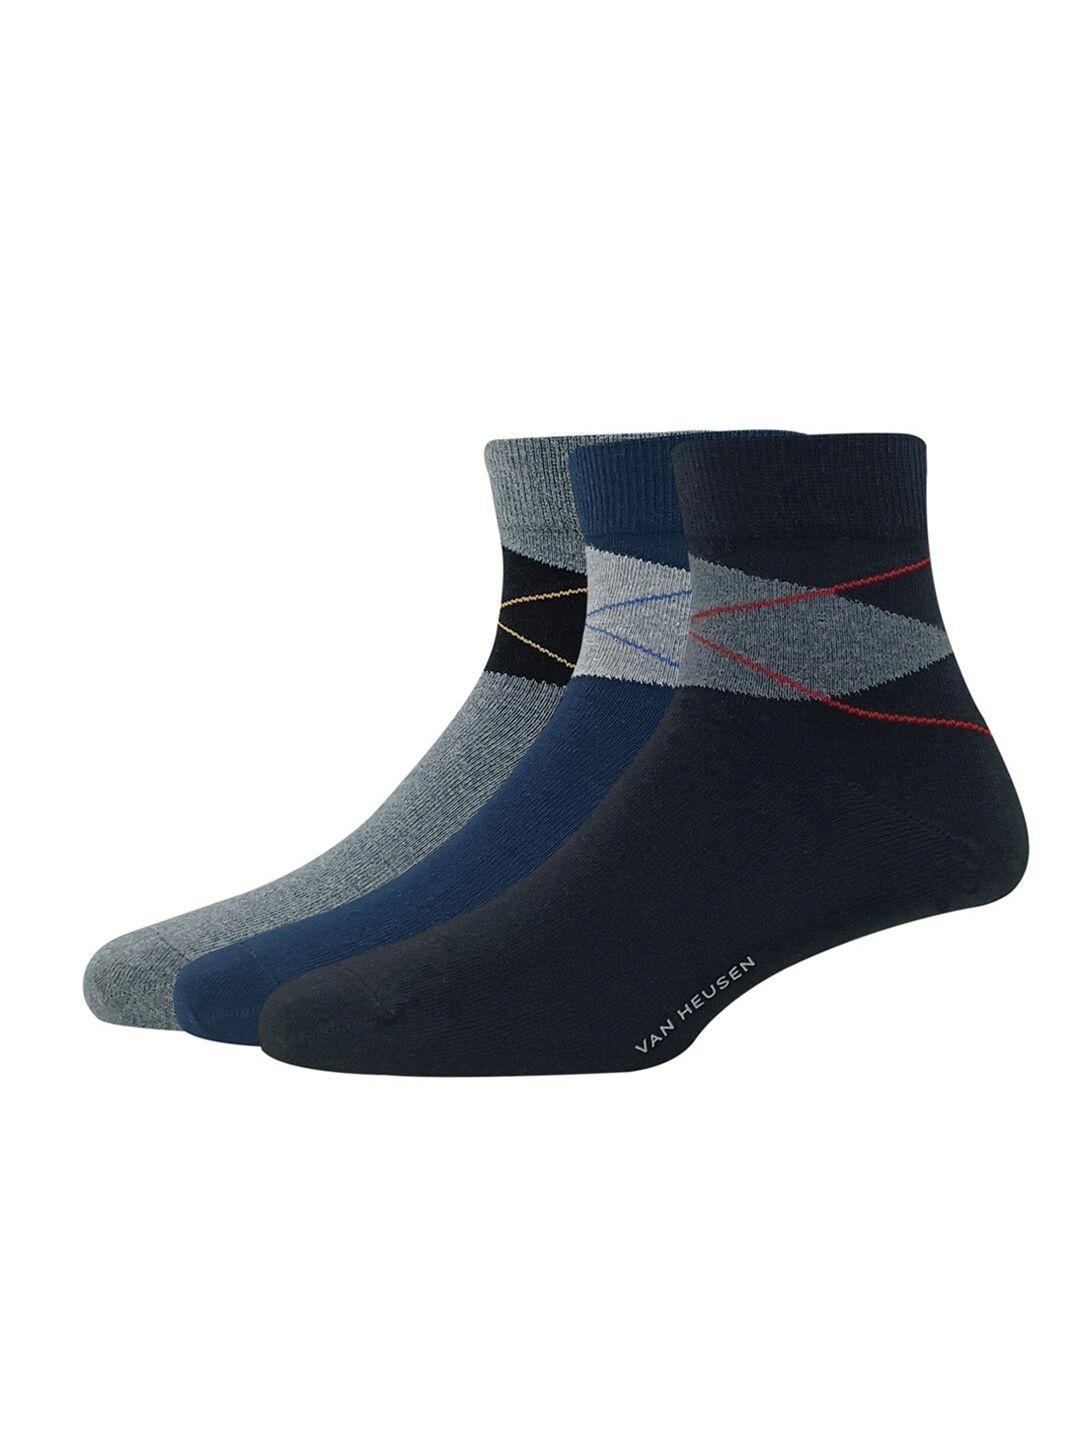 van-heusen-men-pack-of-3-patterned-above-ankle-length-socks